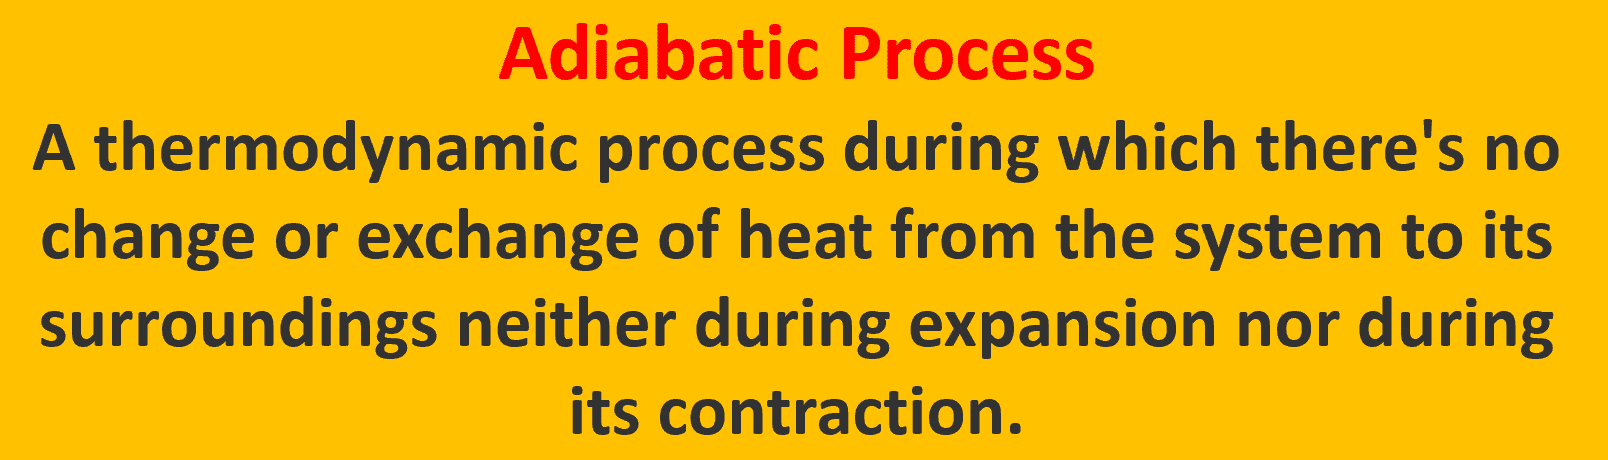 adiabatic-process-definition-1